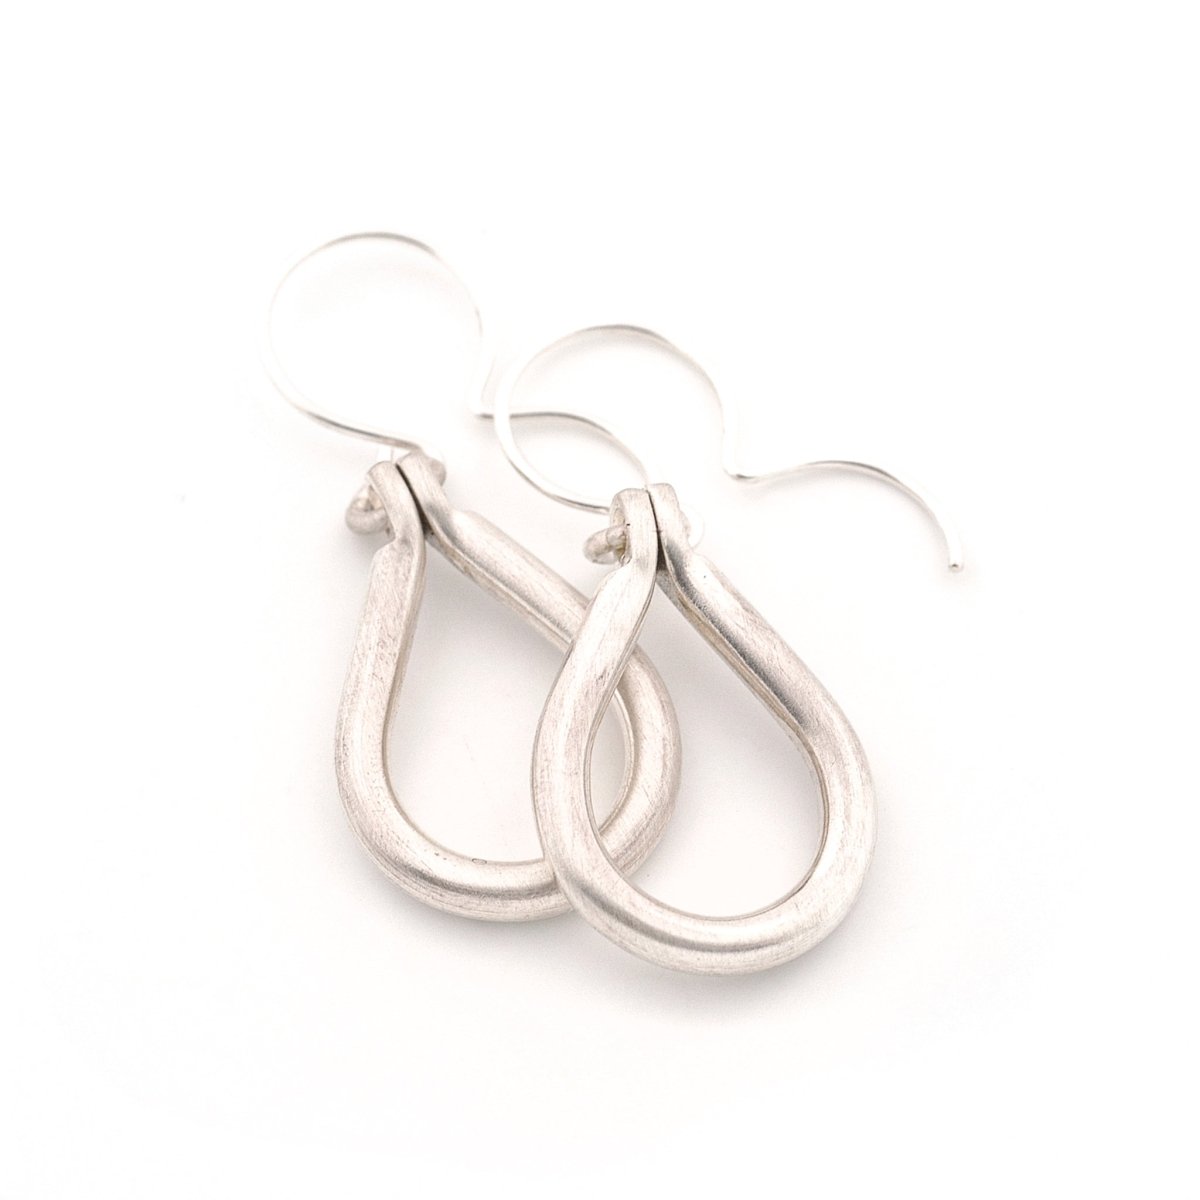 Brushed Sterling Silver Teardrop Earrings - John Paul Designs